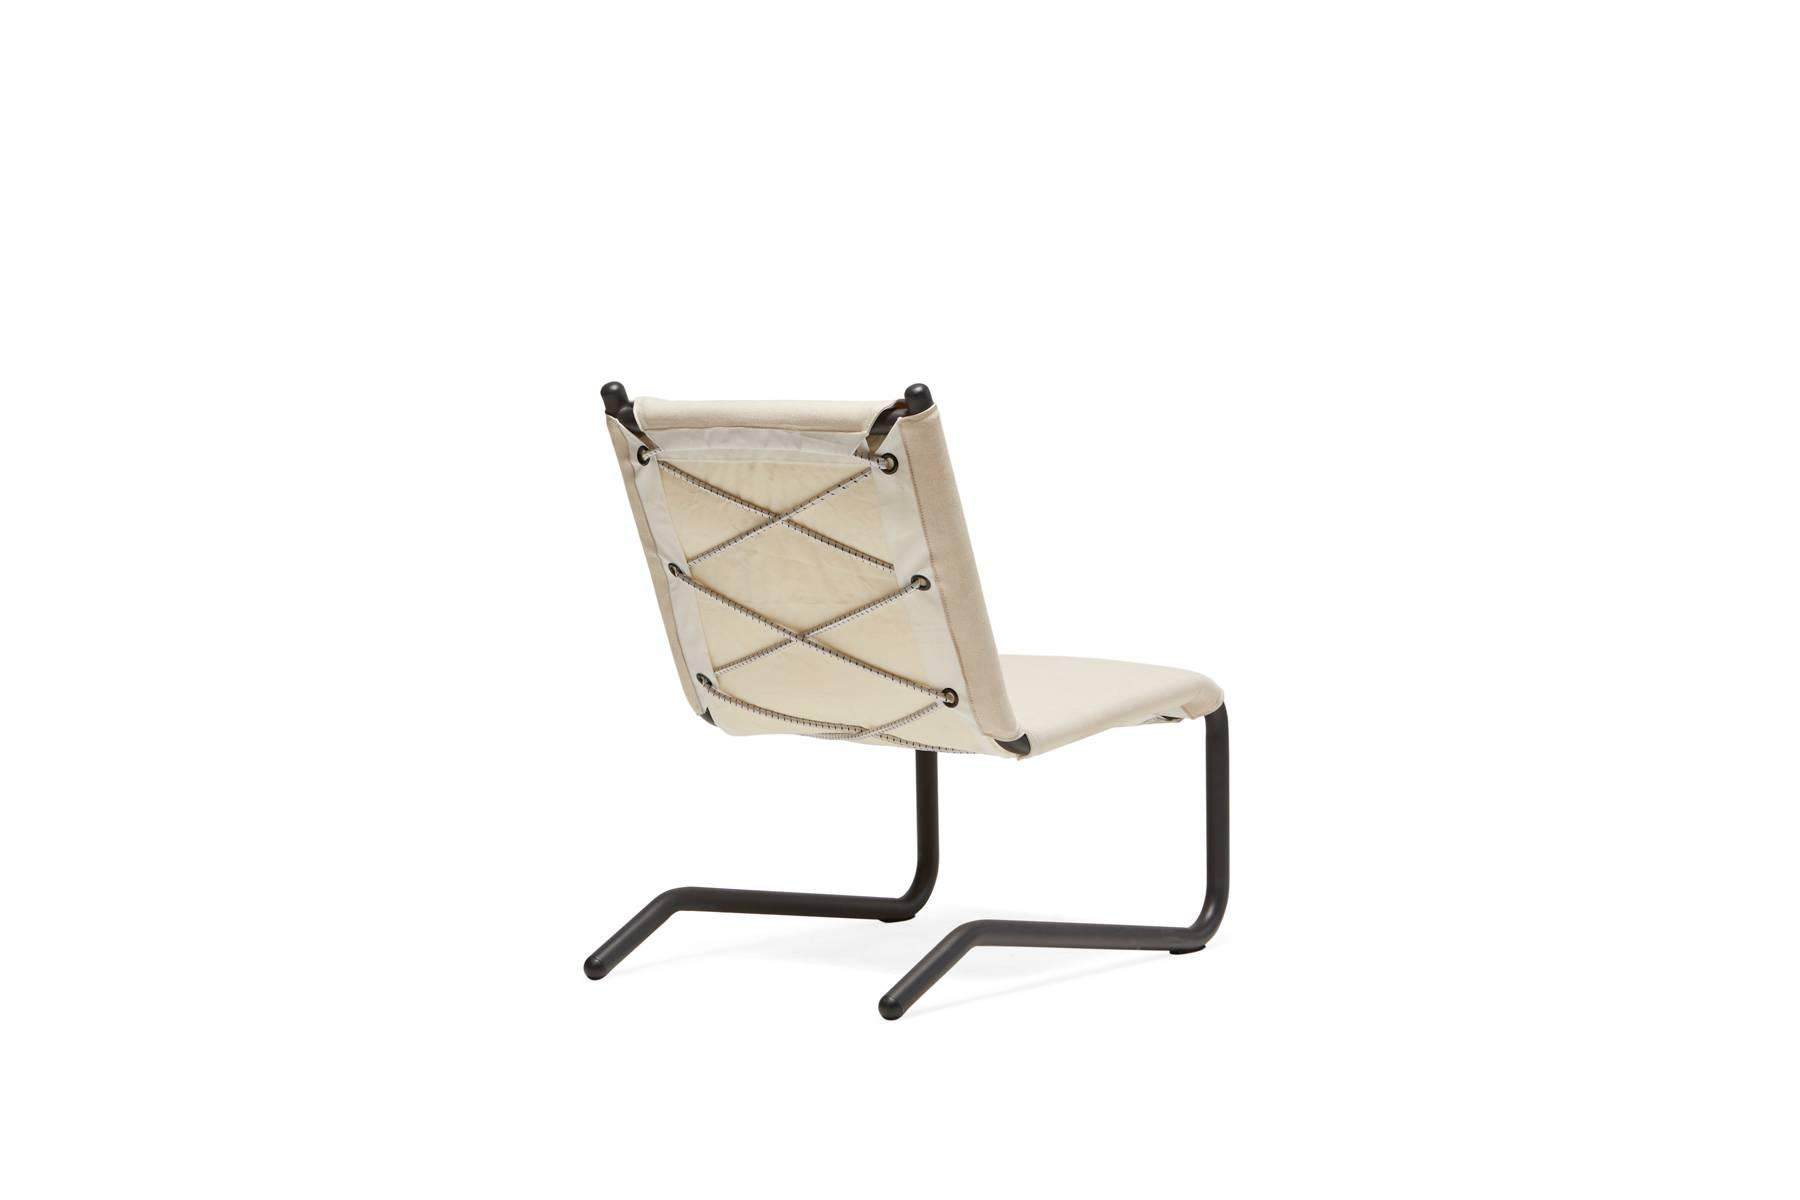 Vietnamese Bowline Chair in Cream Canvas - In Stock